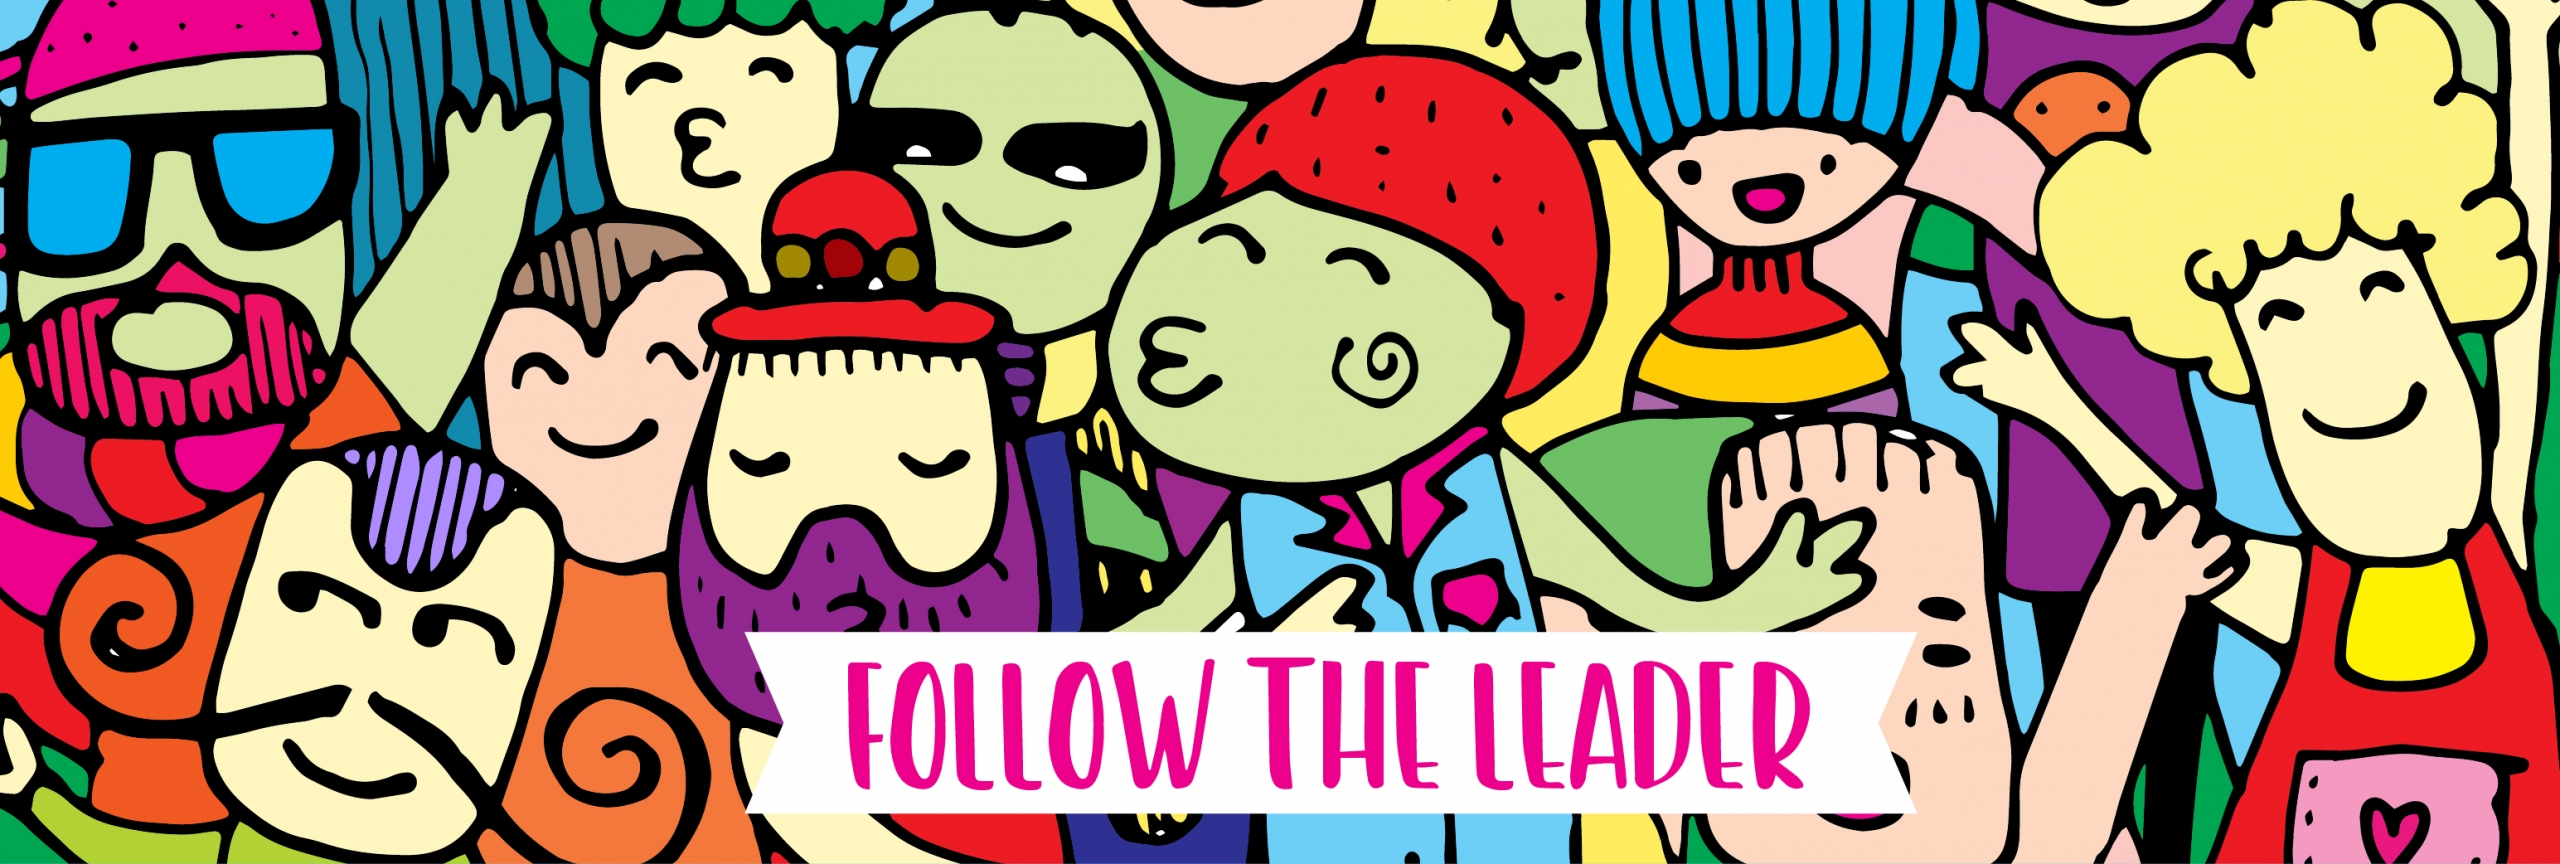 follow the leader children